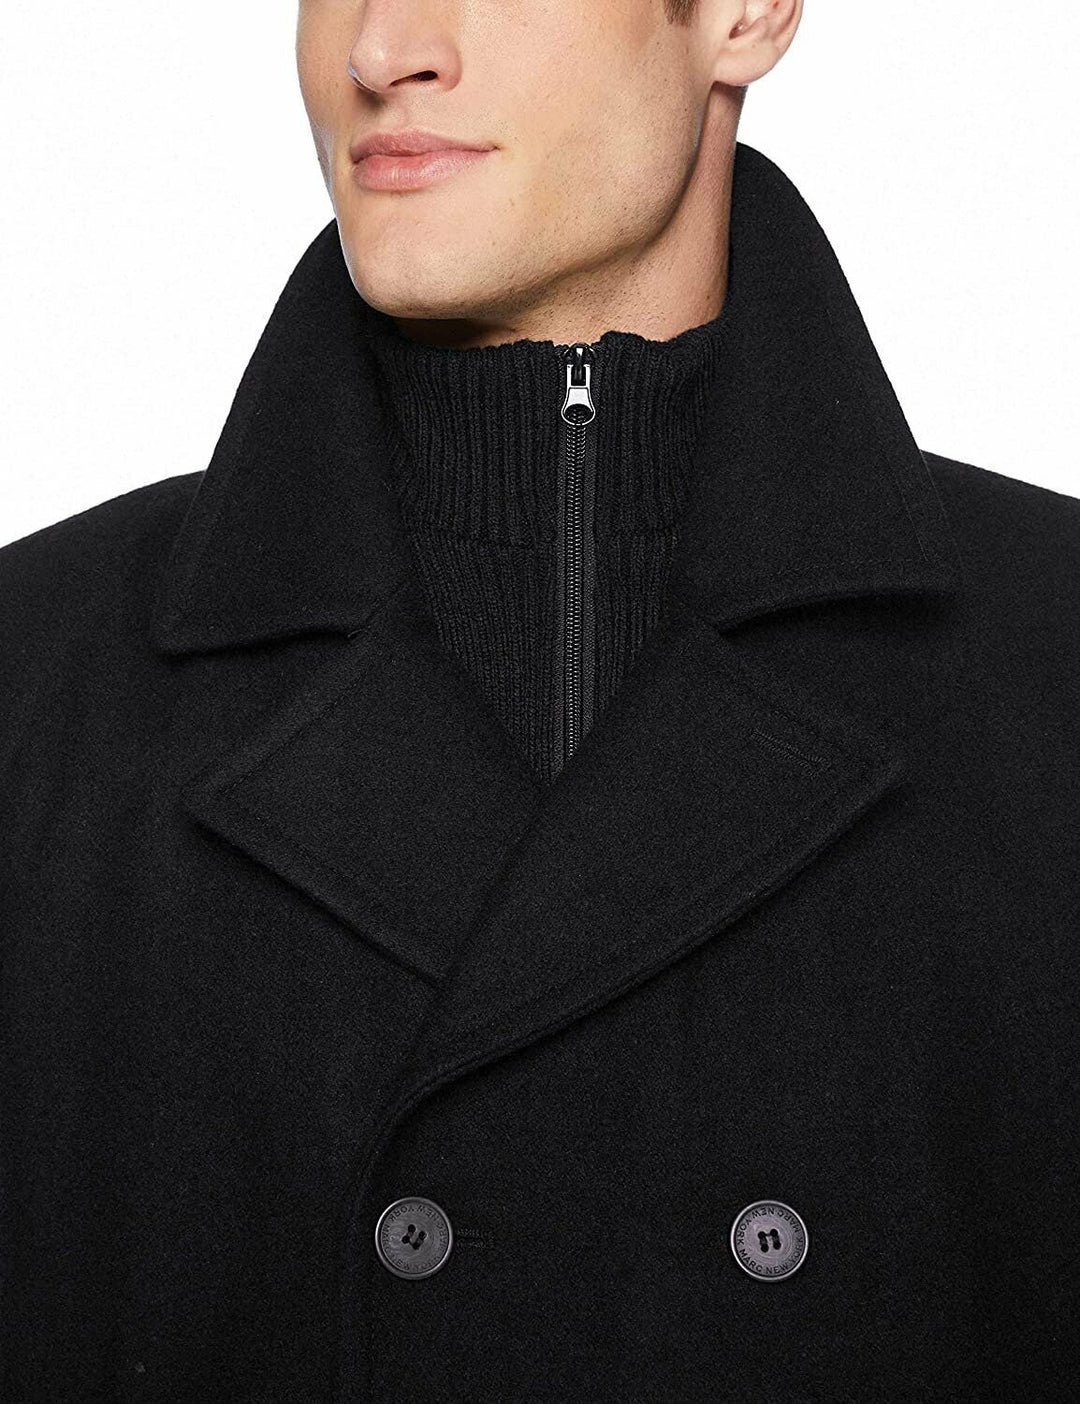 Marc New York by Andrew Marc Men's Burnett Melton Wool Pea Coat Jacket